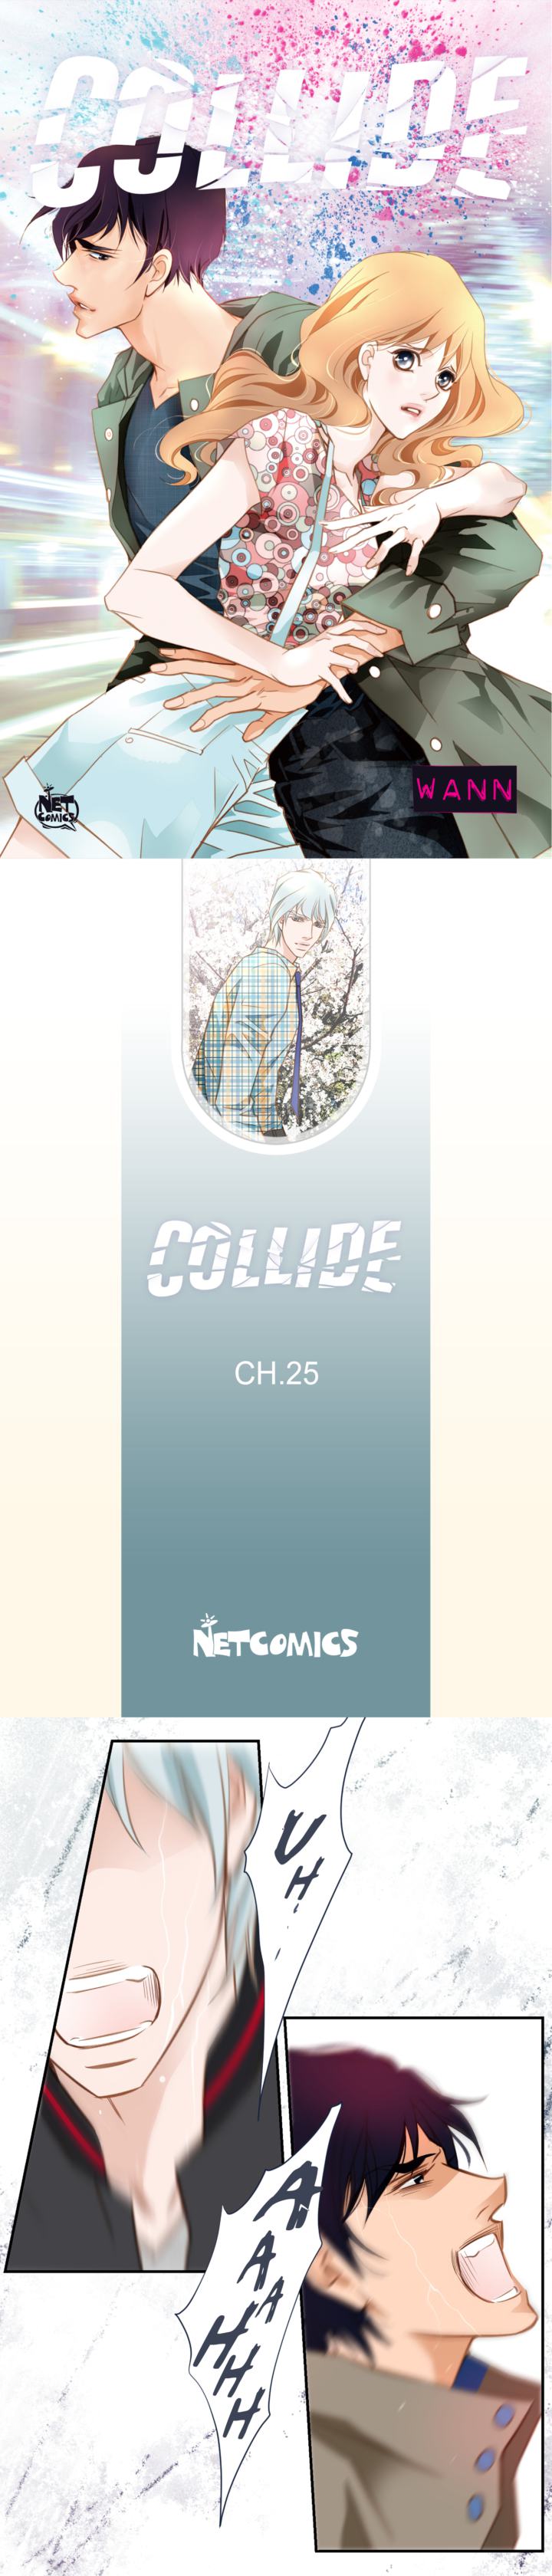 Collide Ch.25